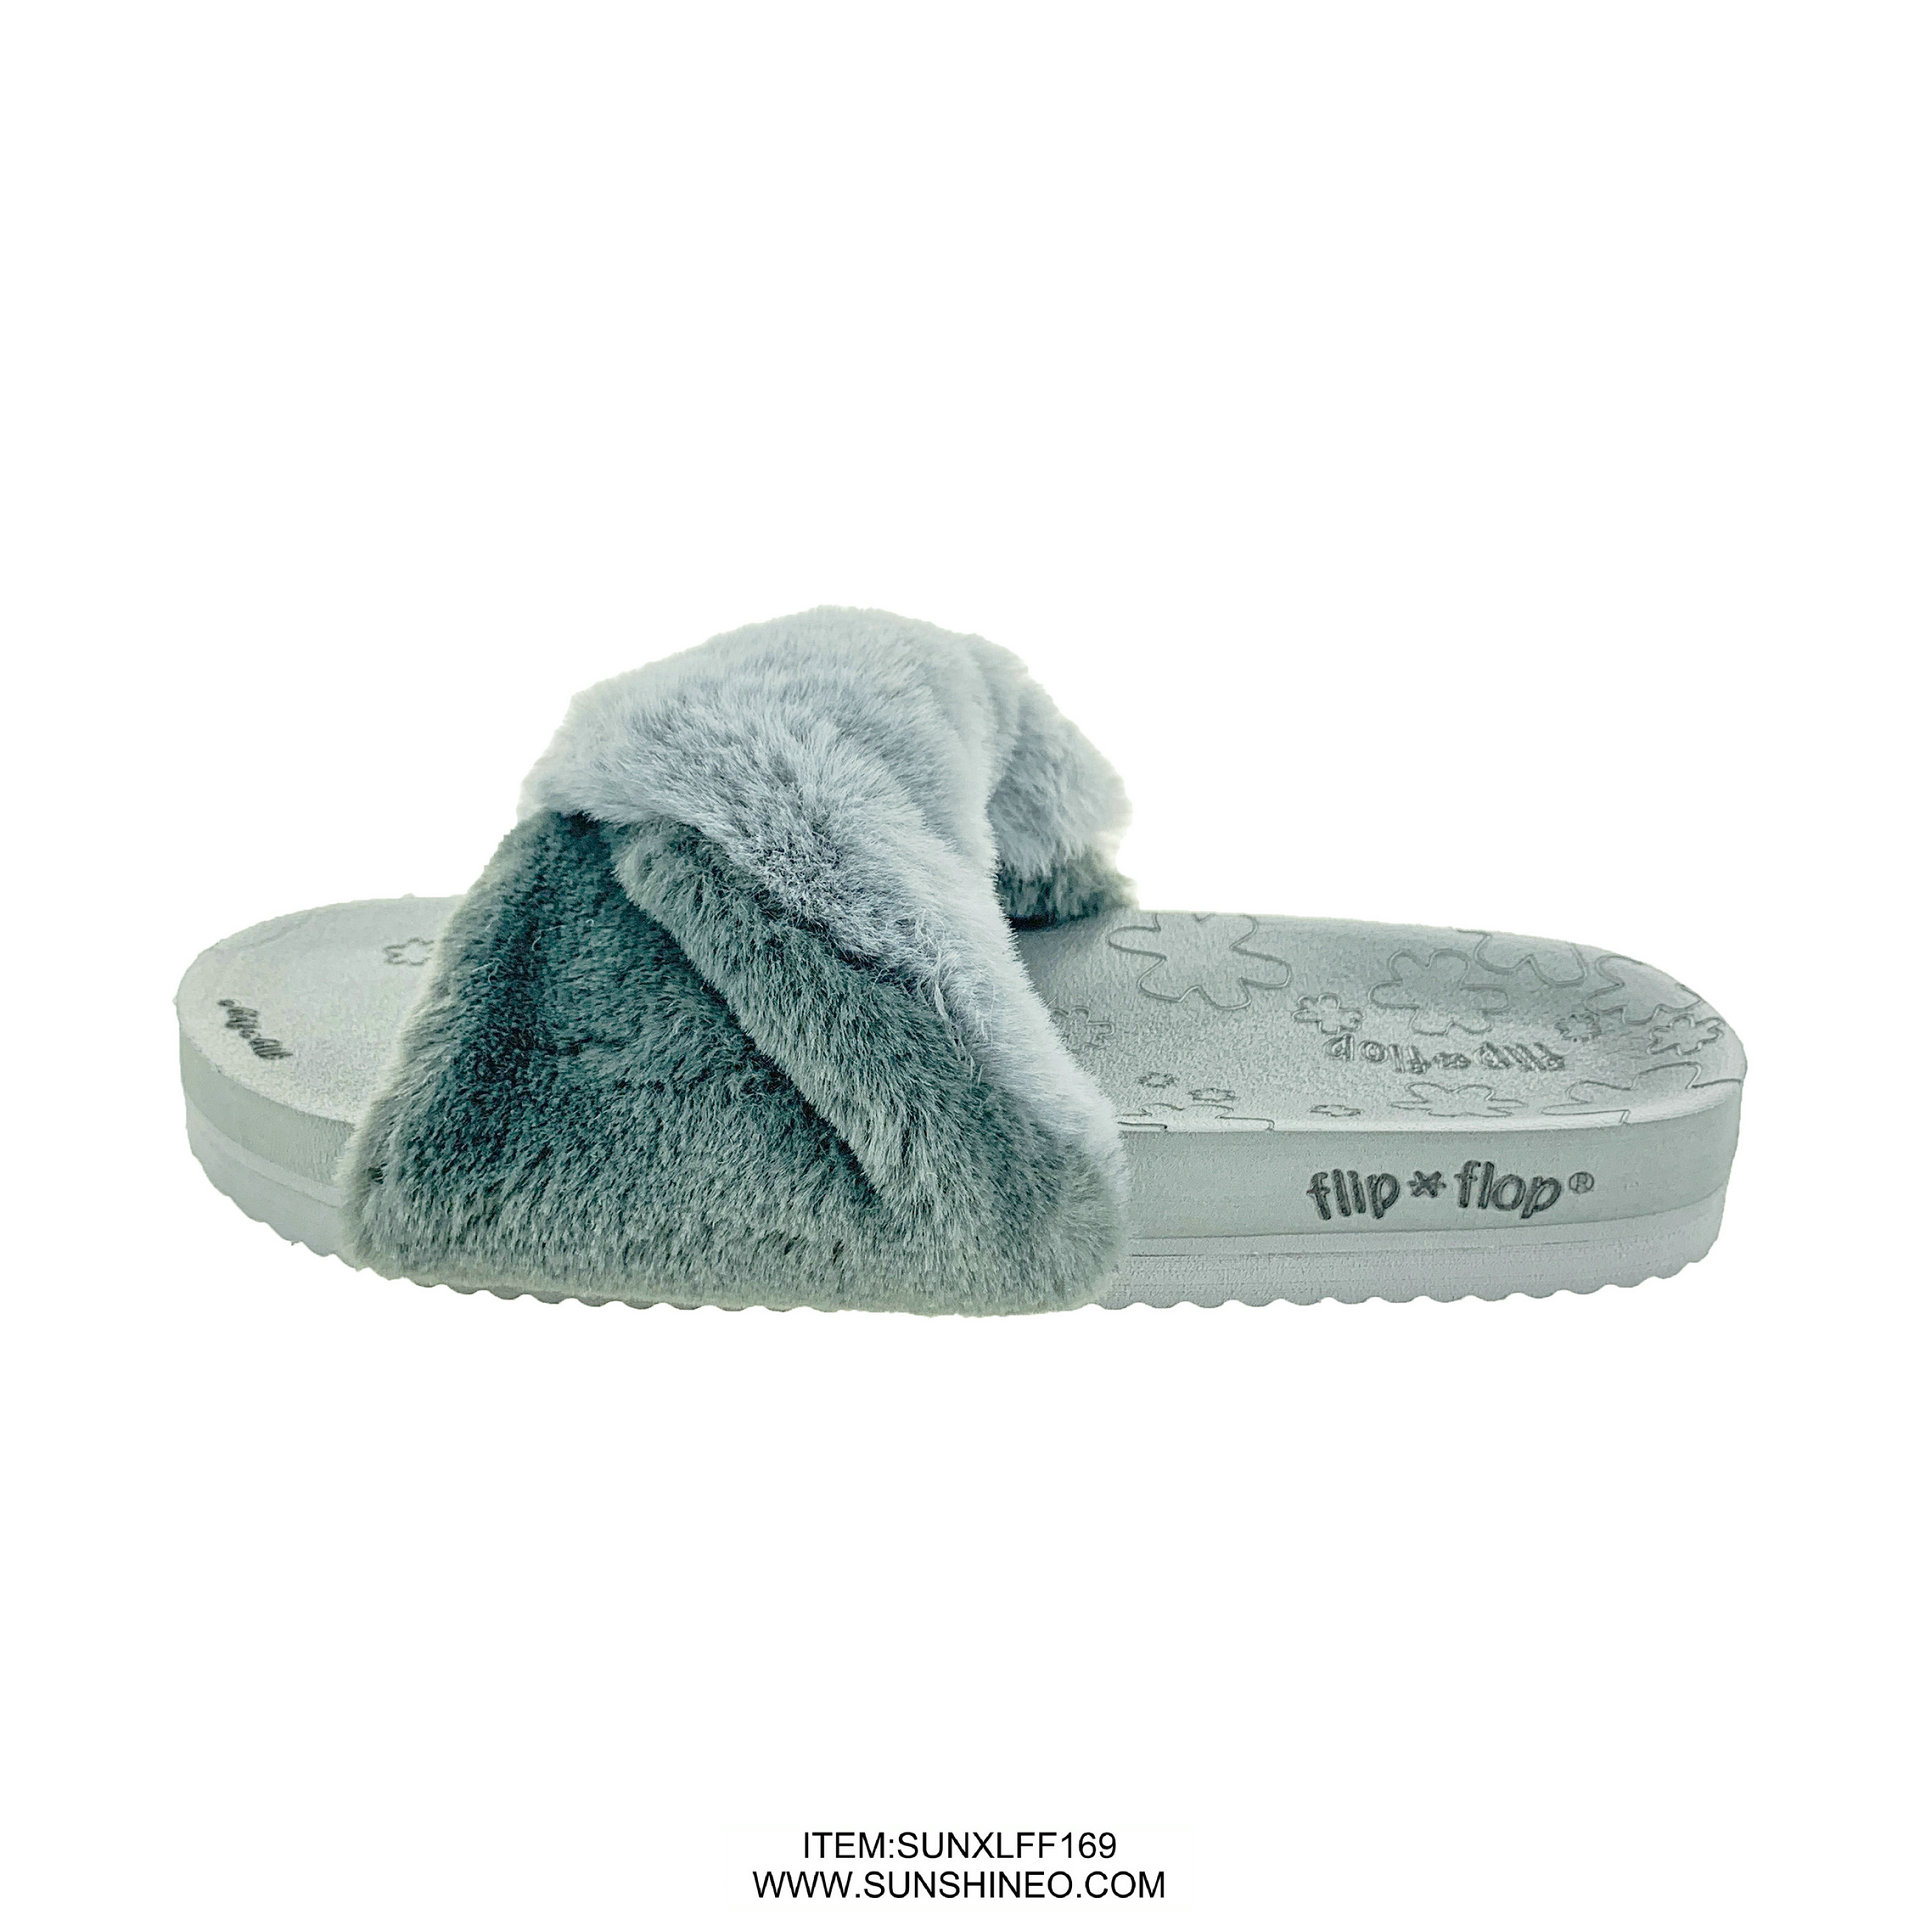 SUNXLFF169 fur flip flop sandals winter slippers